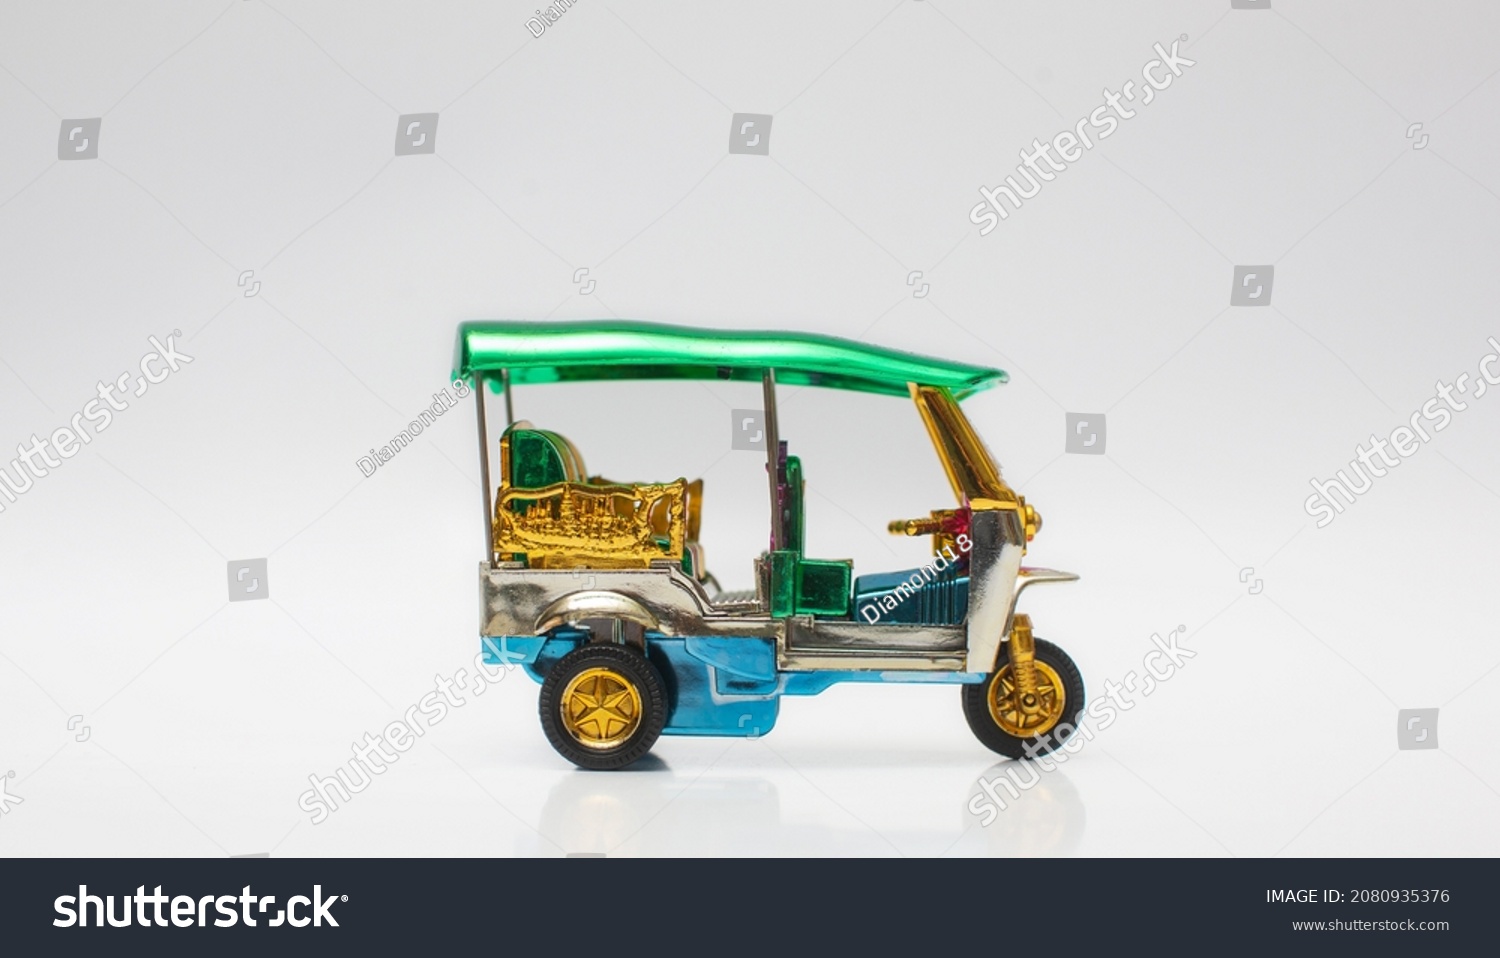 Tuk tuk Taxi car Souvenir Modelthai boy Toey vehicle